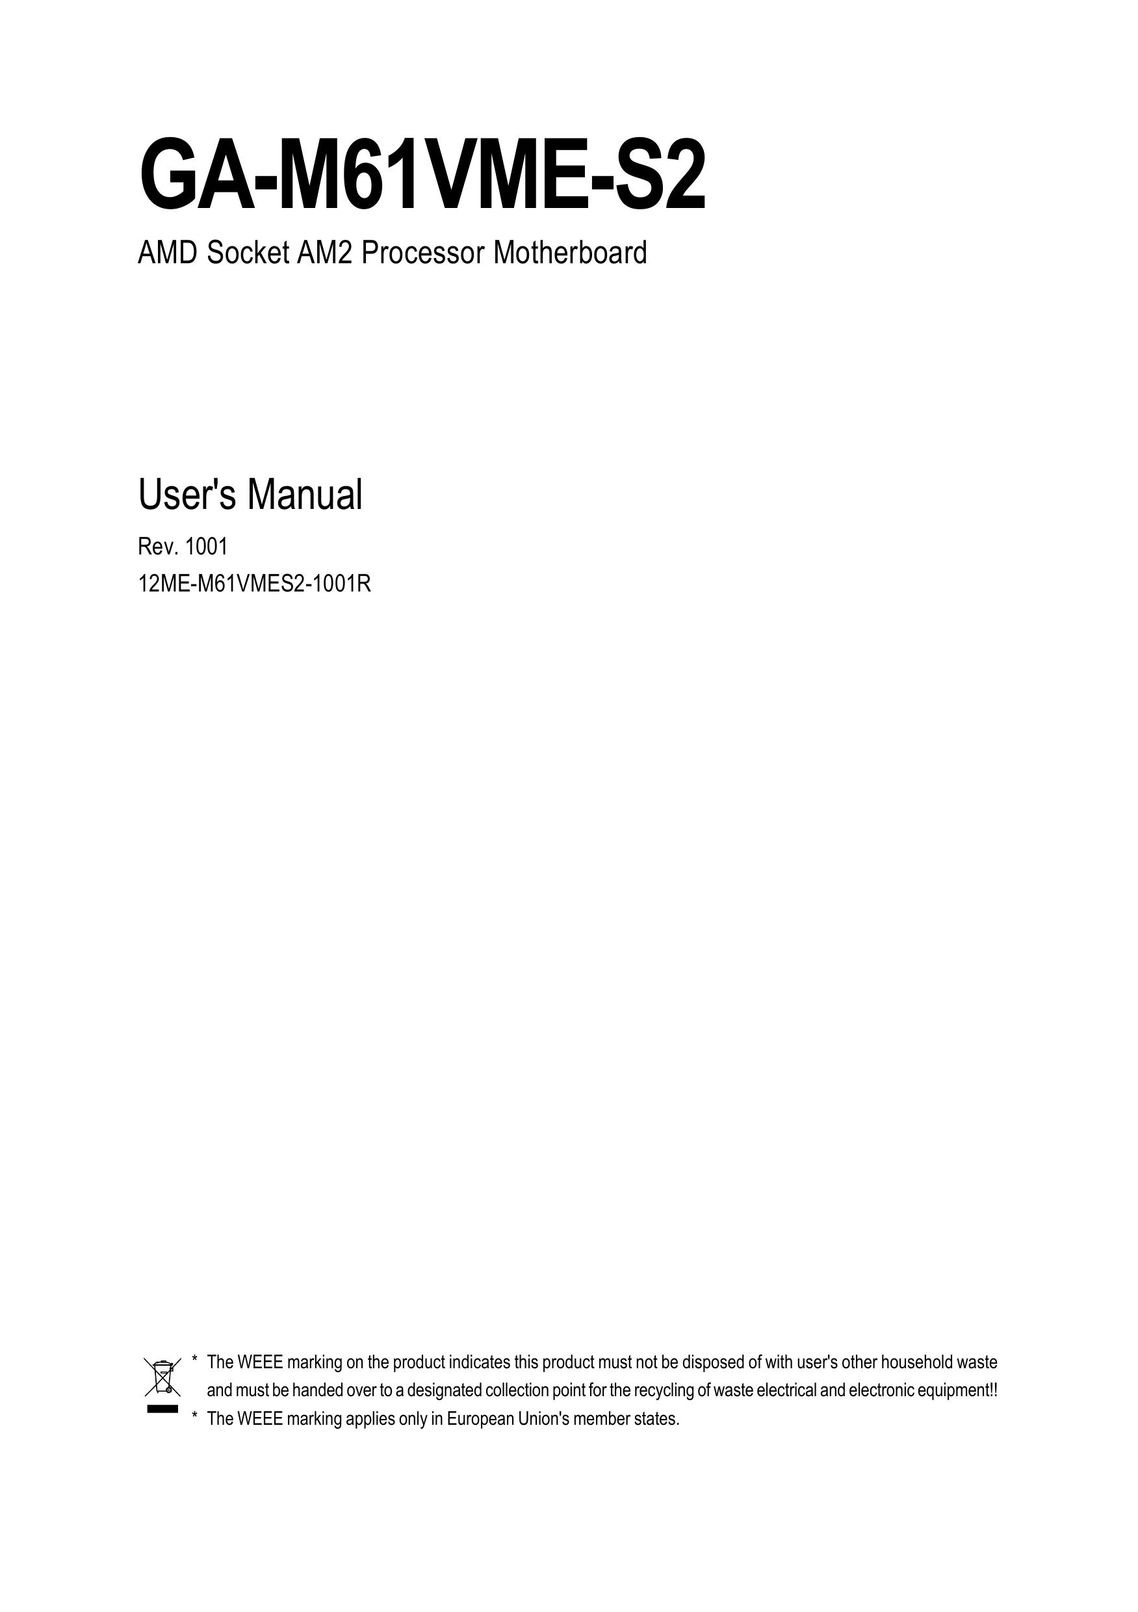 AMD GA-M61VME-S2 Computer Hardware User Manual